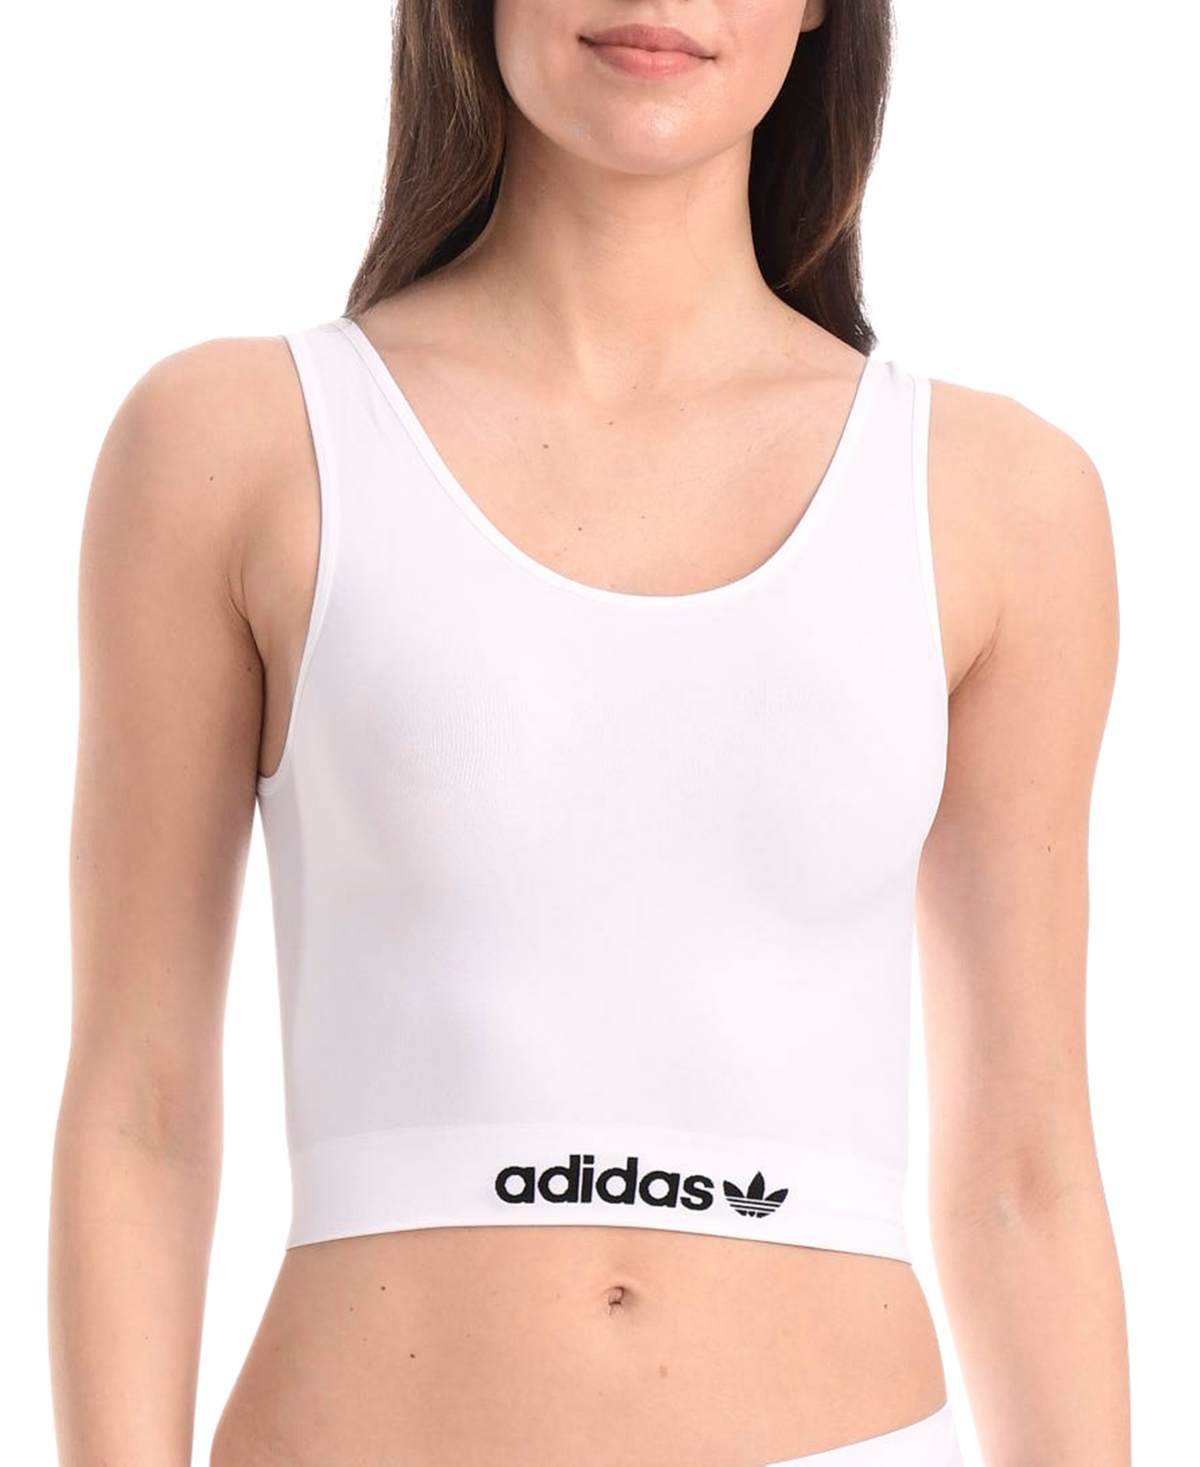 Adidas Originals Intimates Women's Light Support Bralette 4a3h67 In White